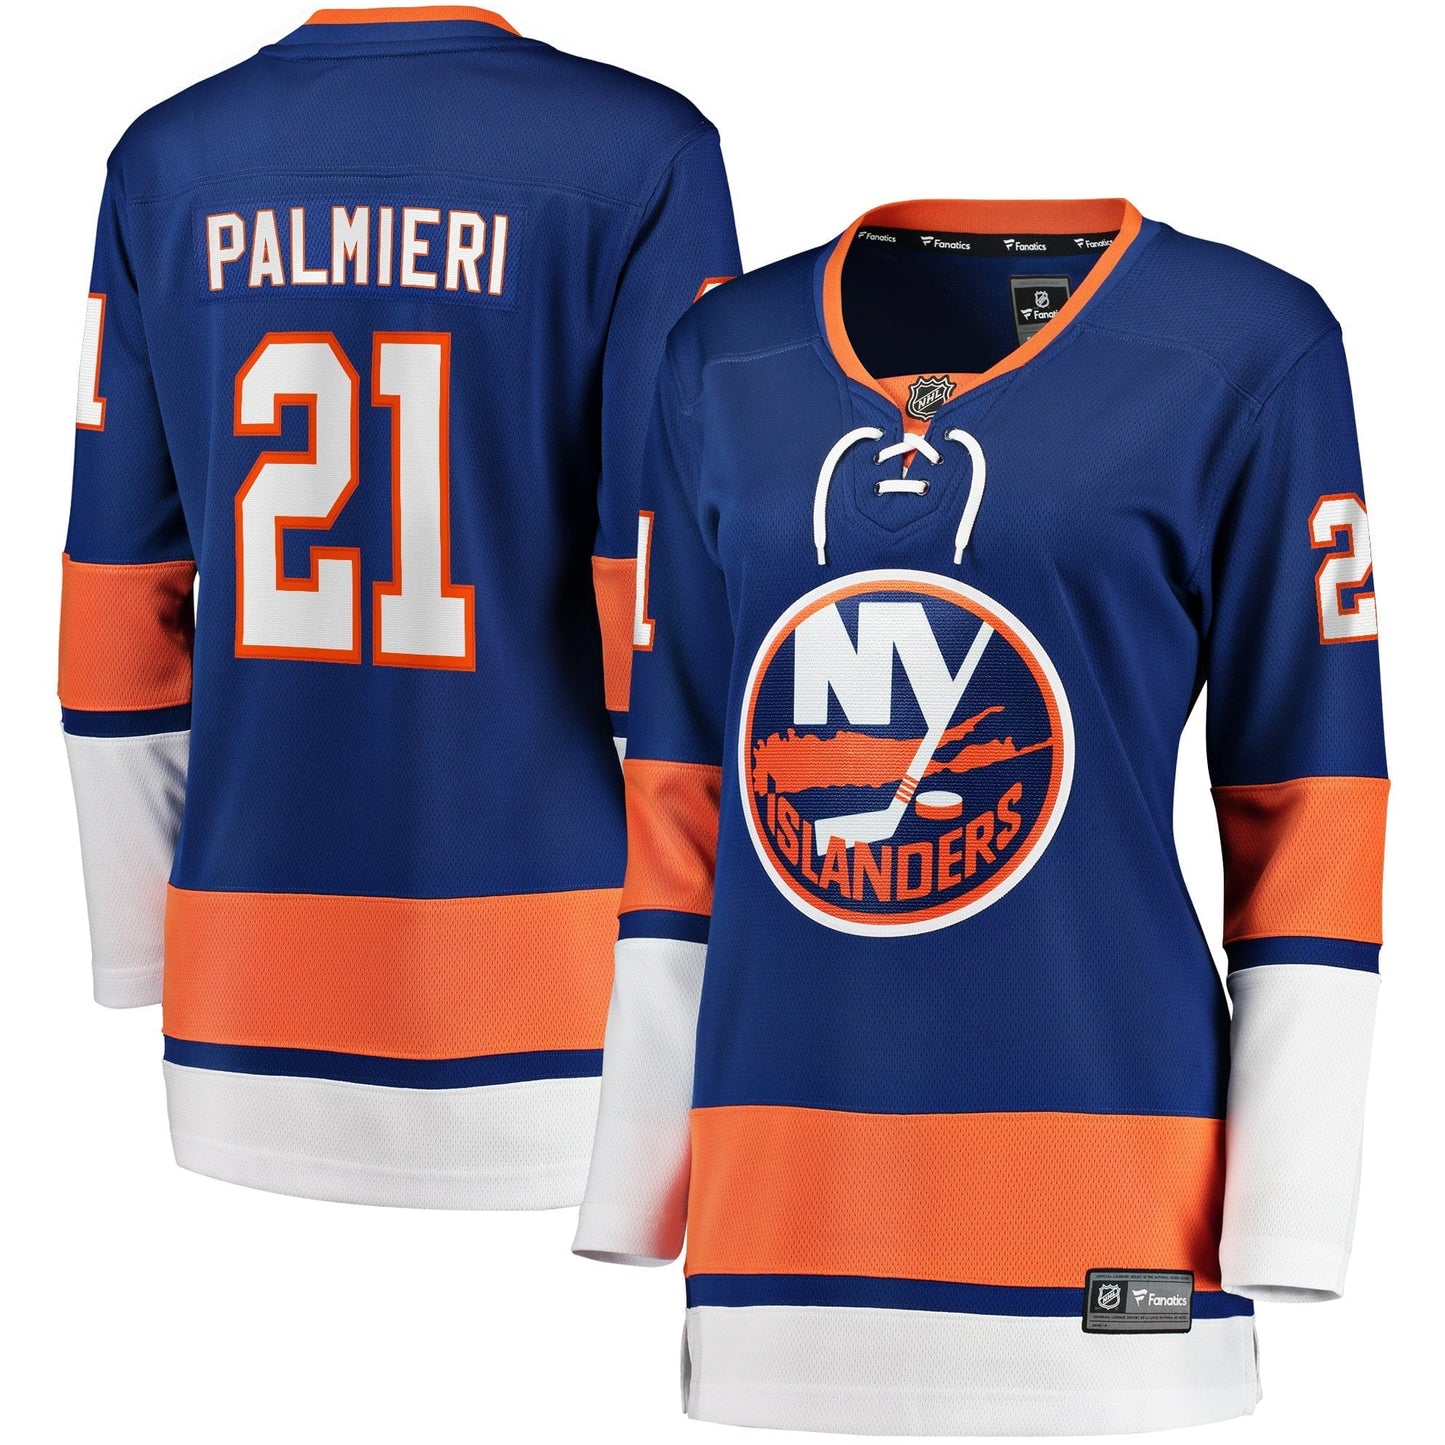 Women's Fanatics Branded Kyle Palmieri Royal New York Islanders 2017/18 Home Breakaway Replica Jersey